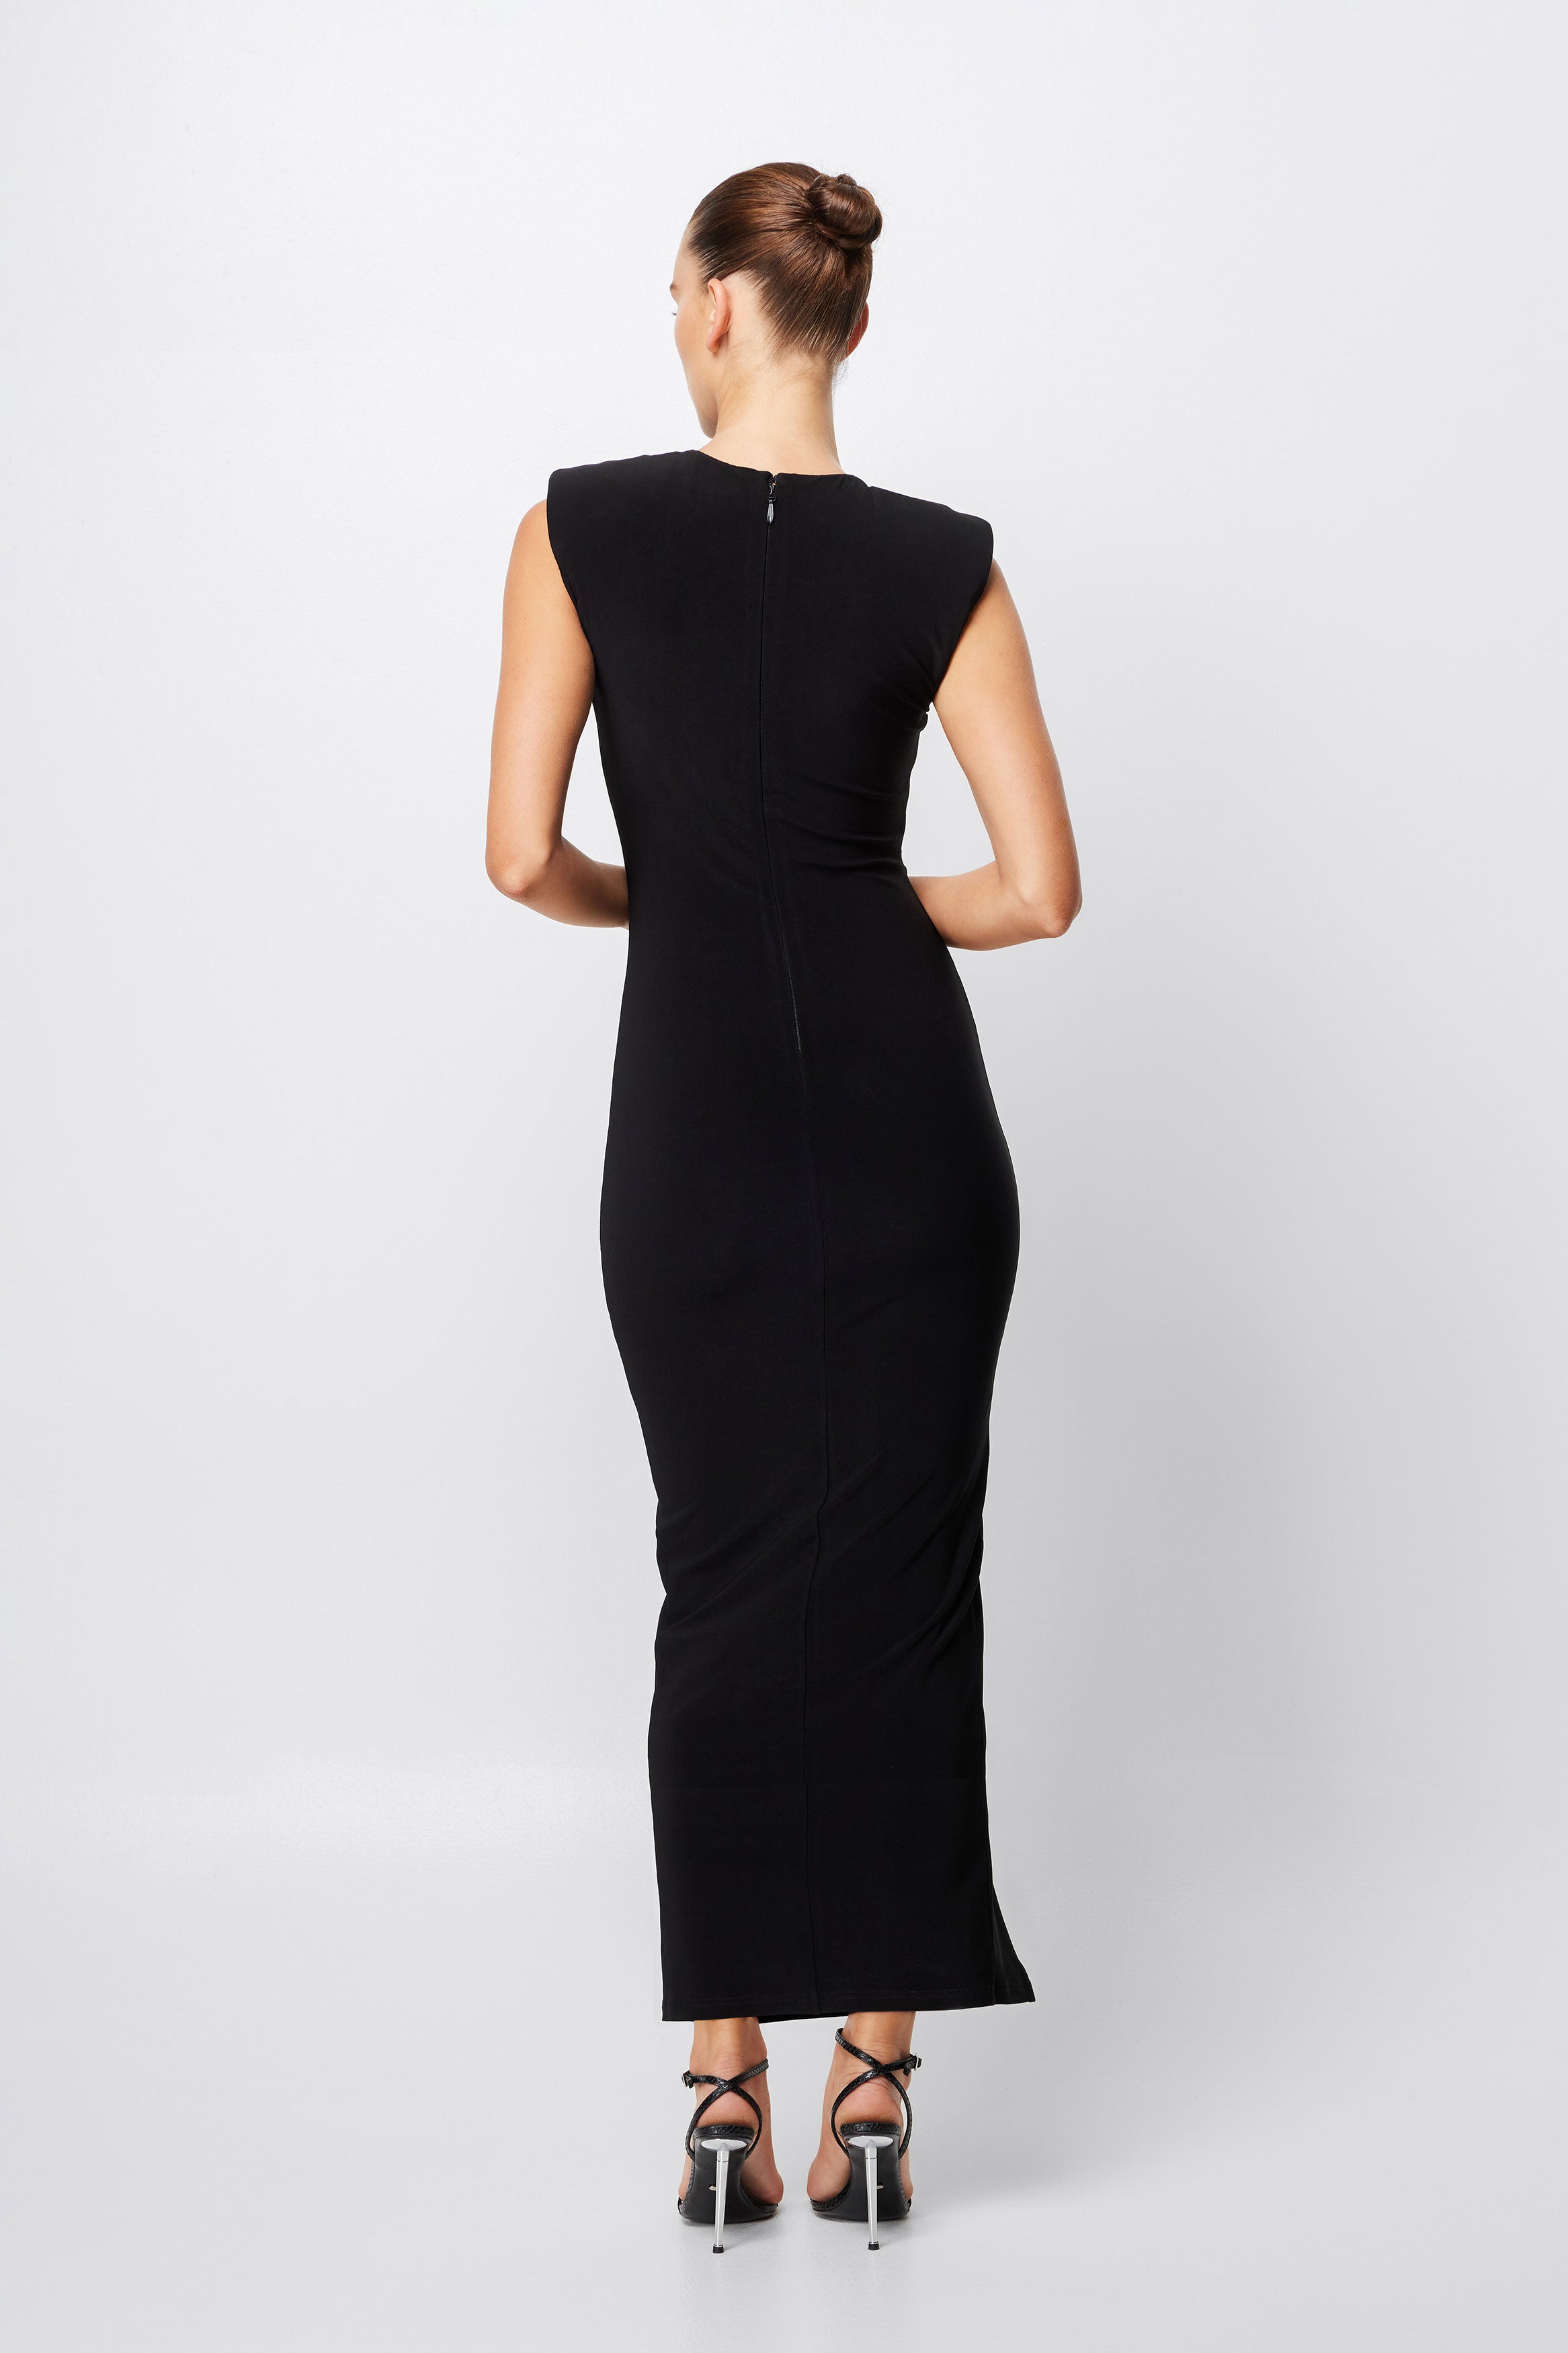 The Ulterior Motive Midi Dress - Black